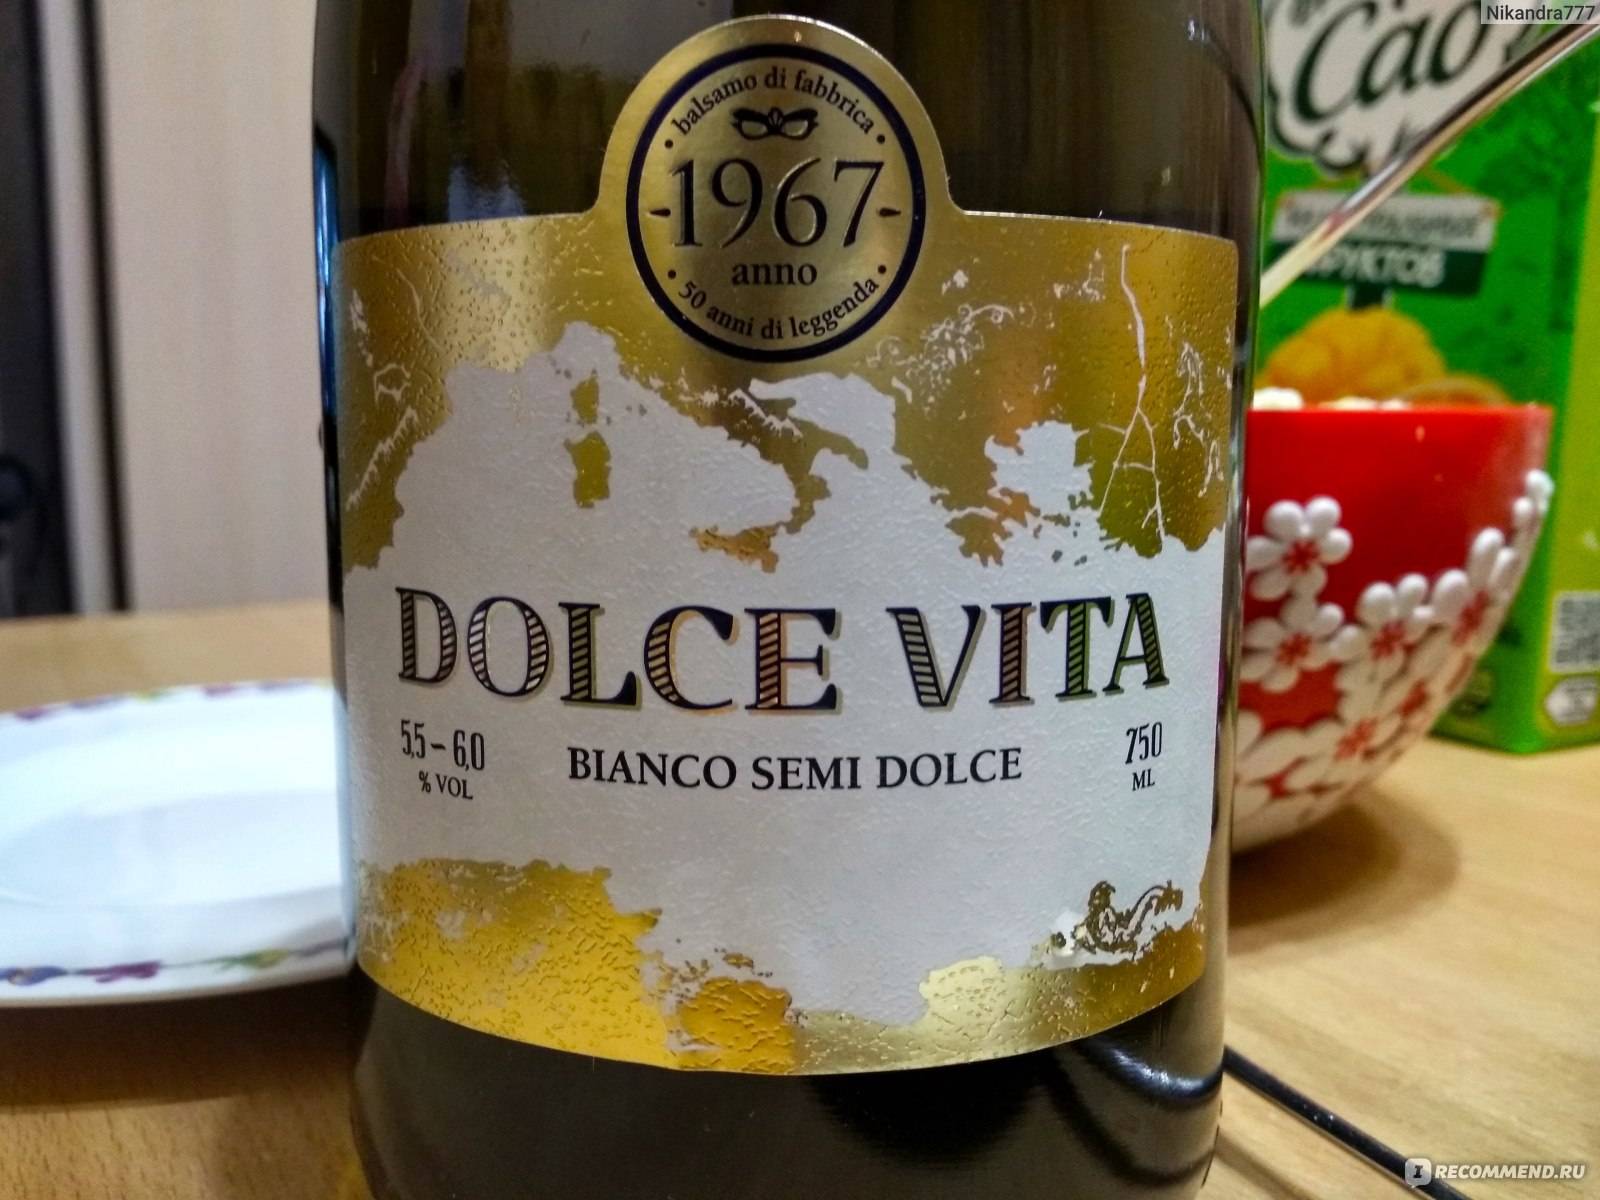 Dolce vita (дольче вита)